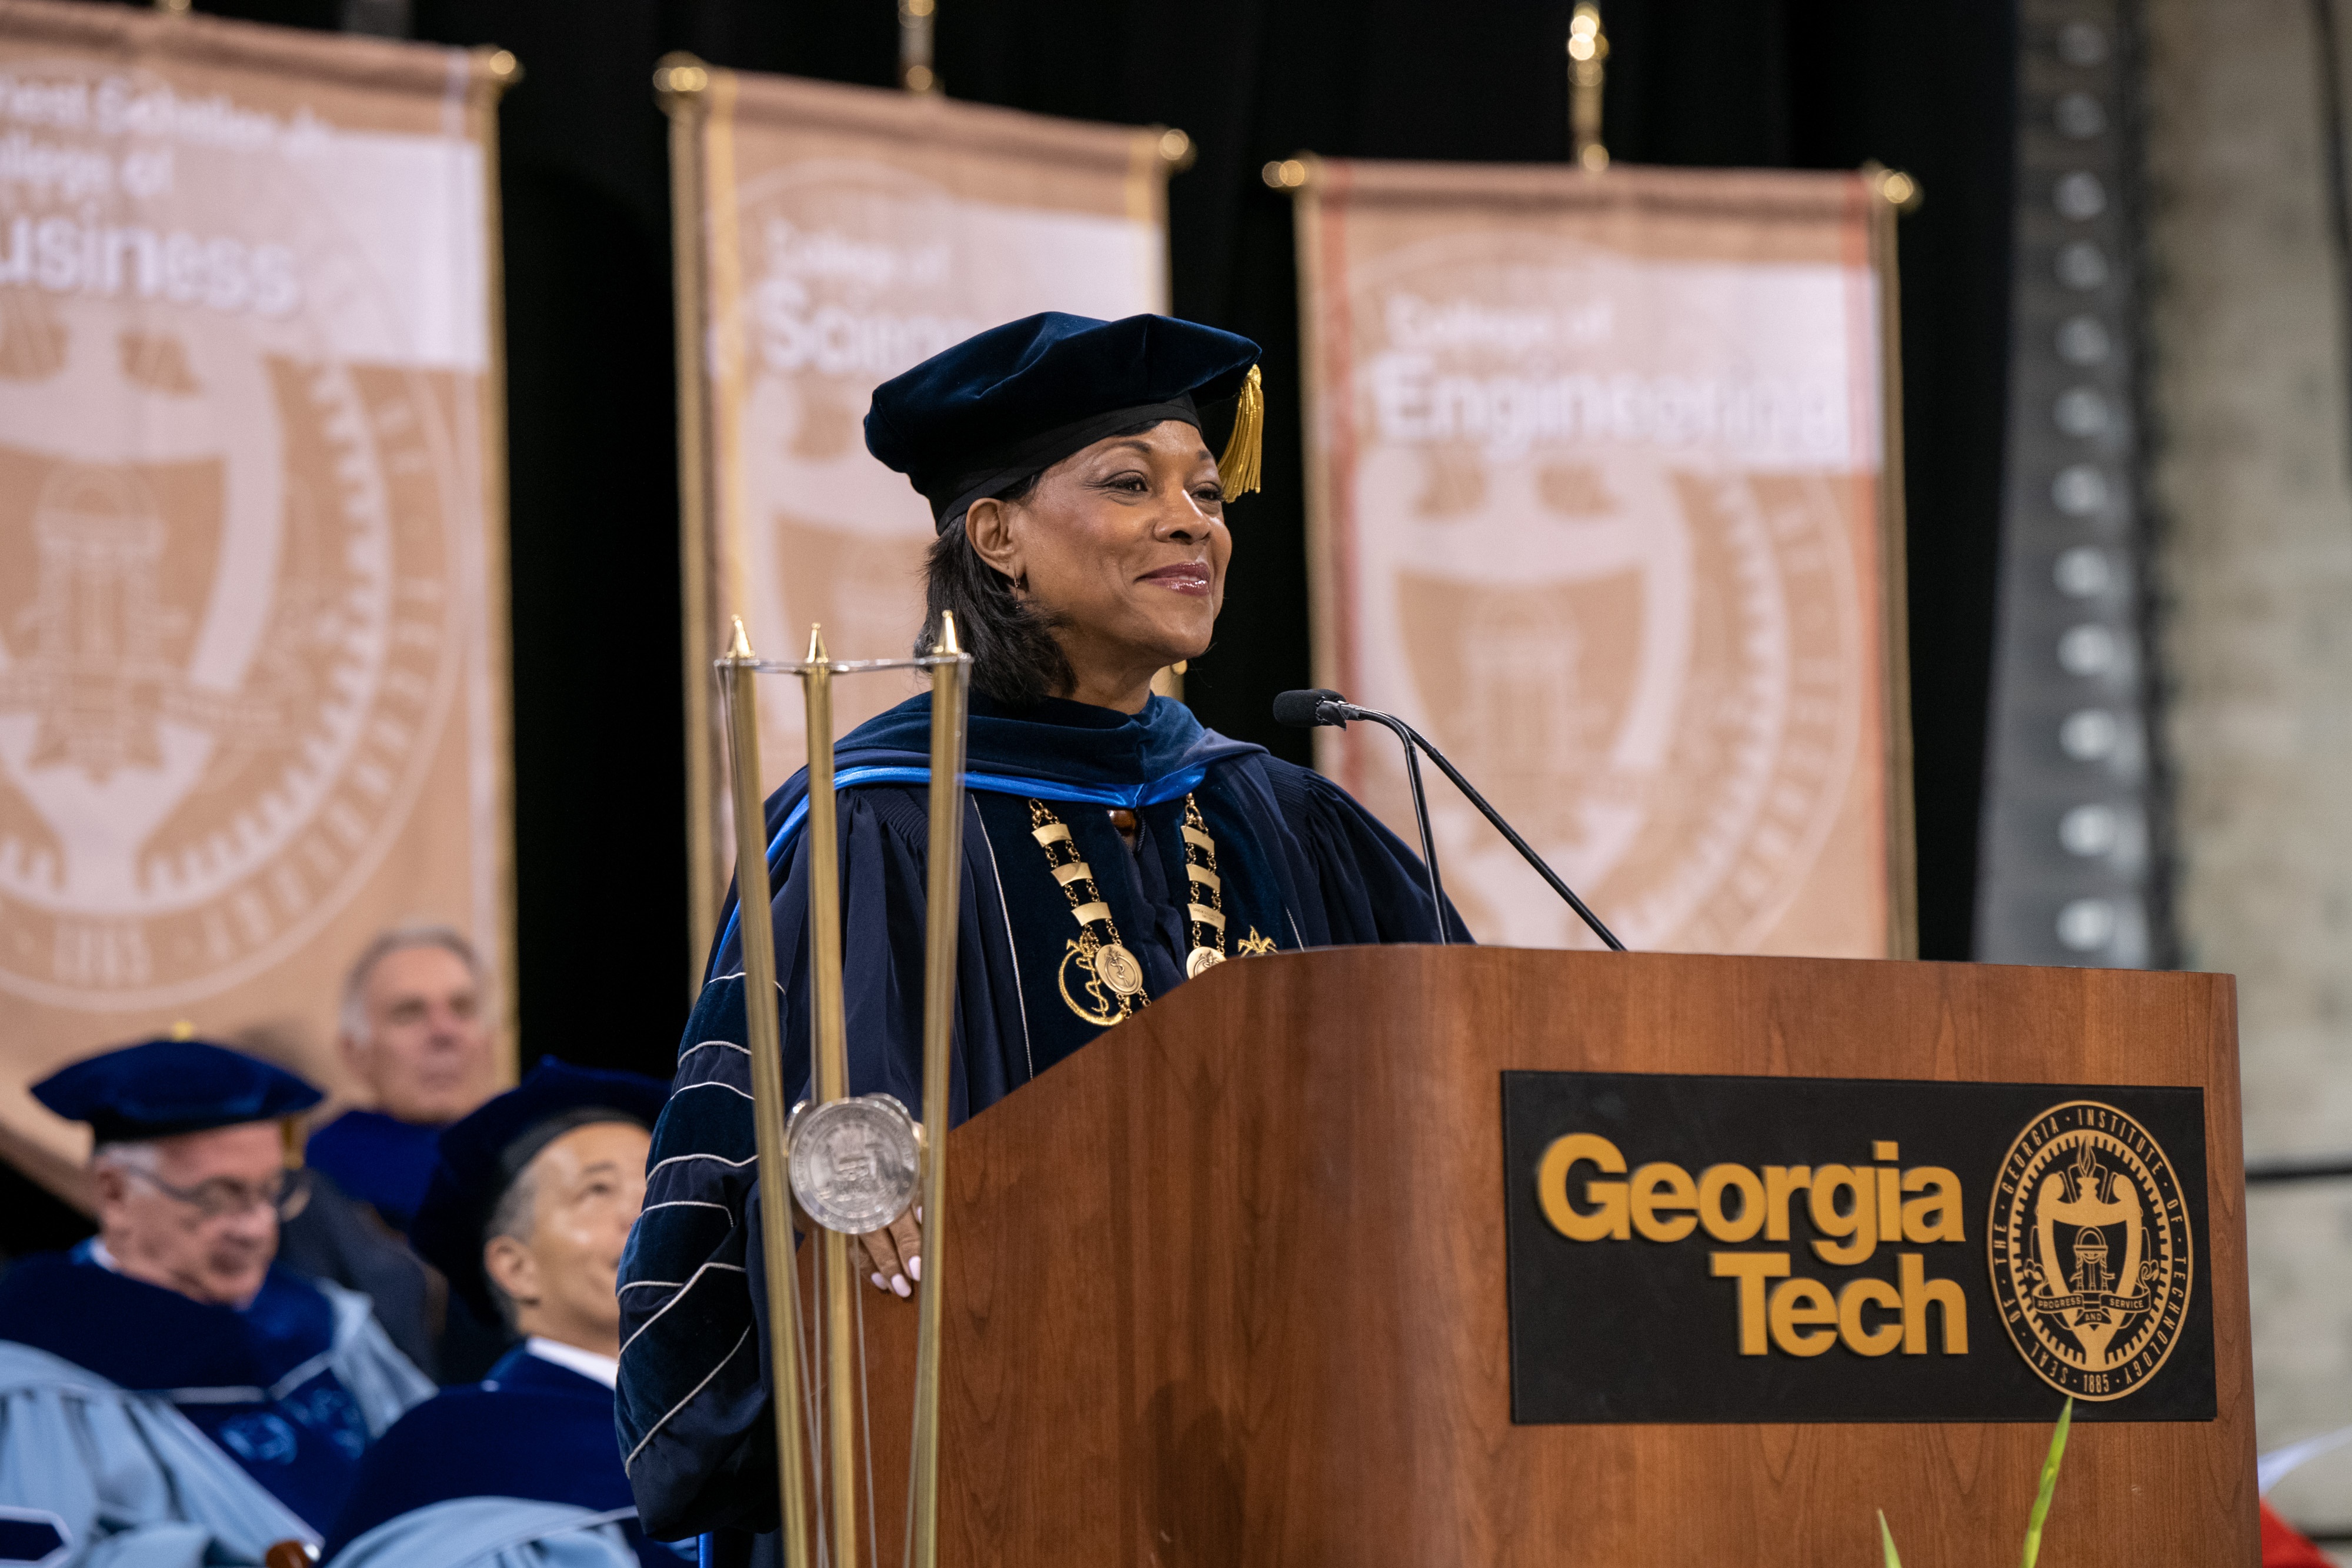 Valerie Montgomery Rice speaks at Georgia Tech